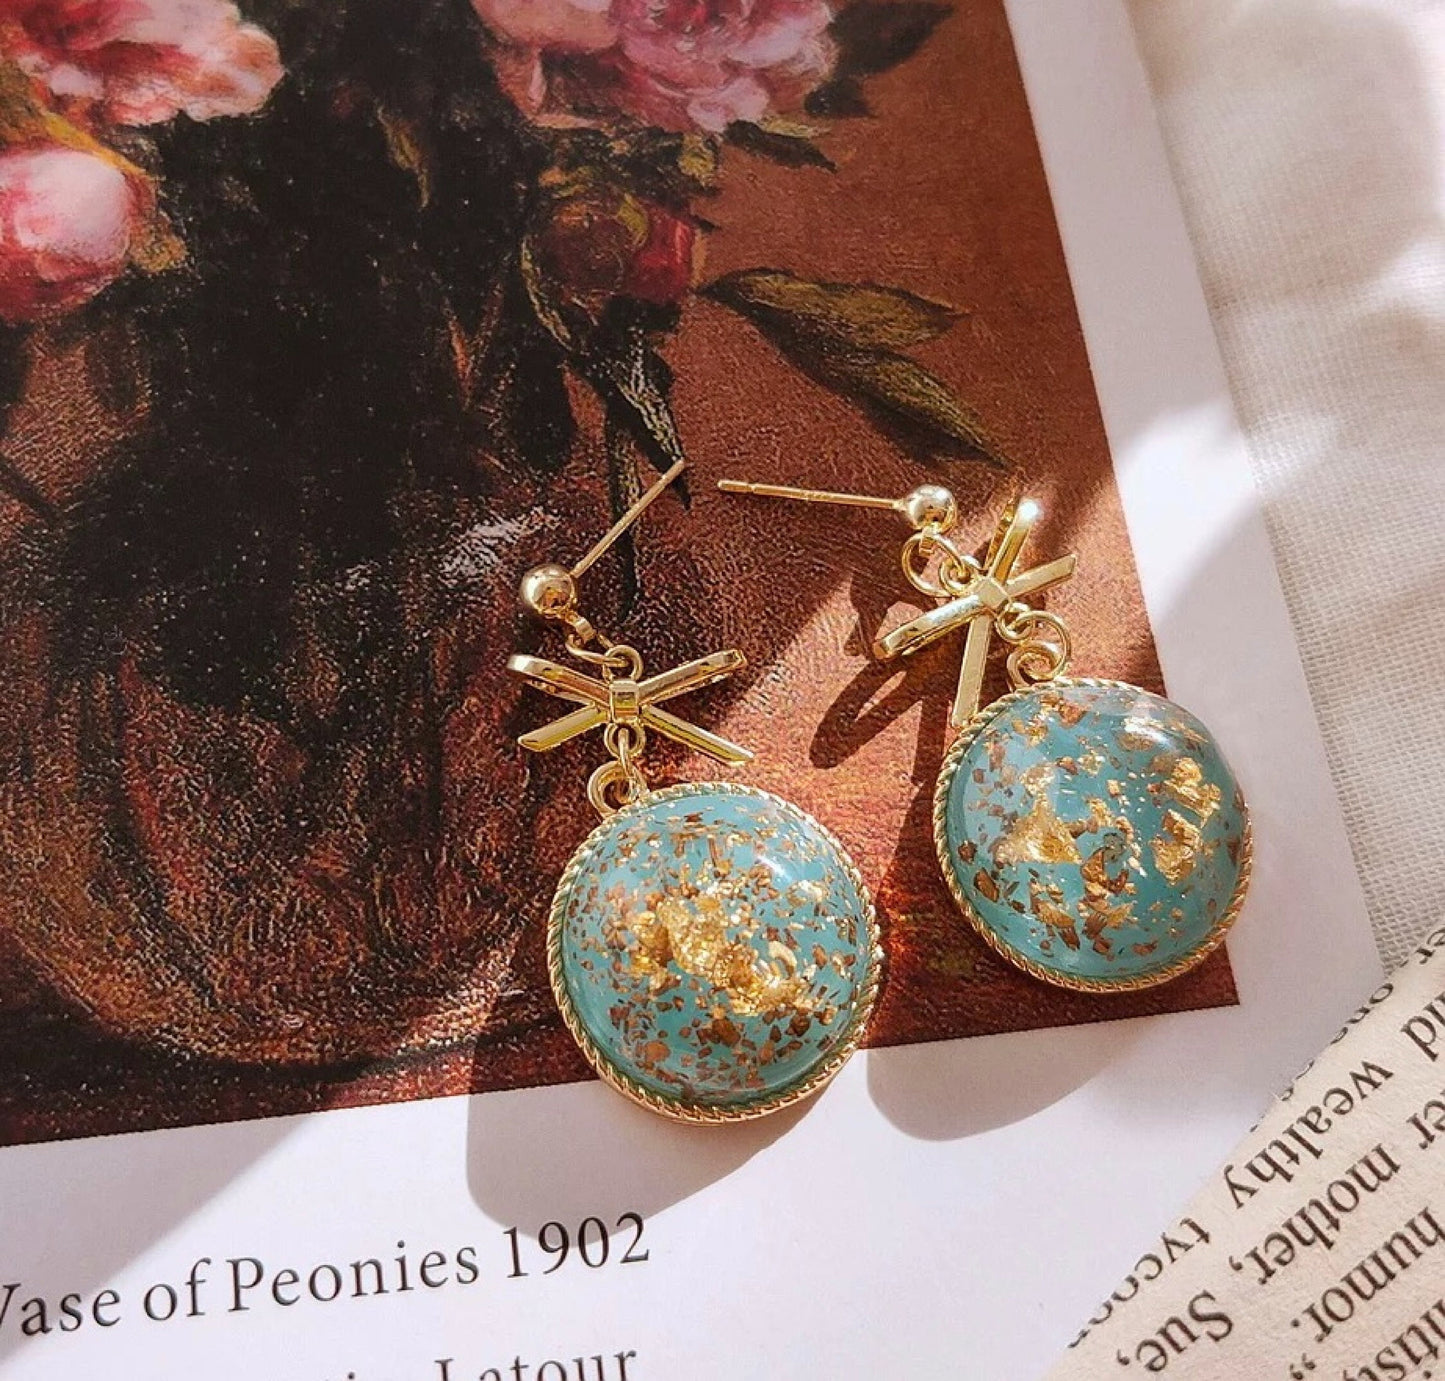 Dried pressed botanical resin earrings, Gold foil leaf jewelry, Round dome earrings, Blue flower earrings, Green vintage statement earrings